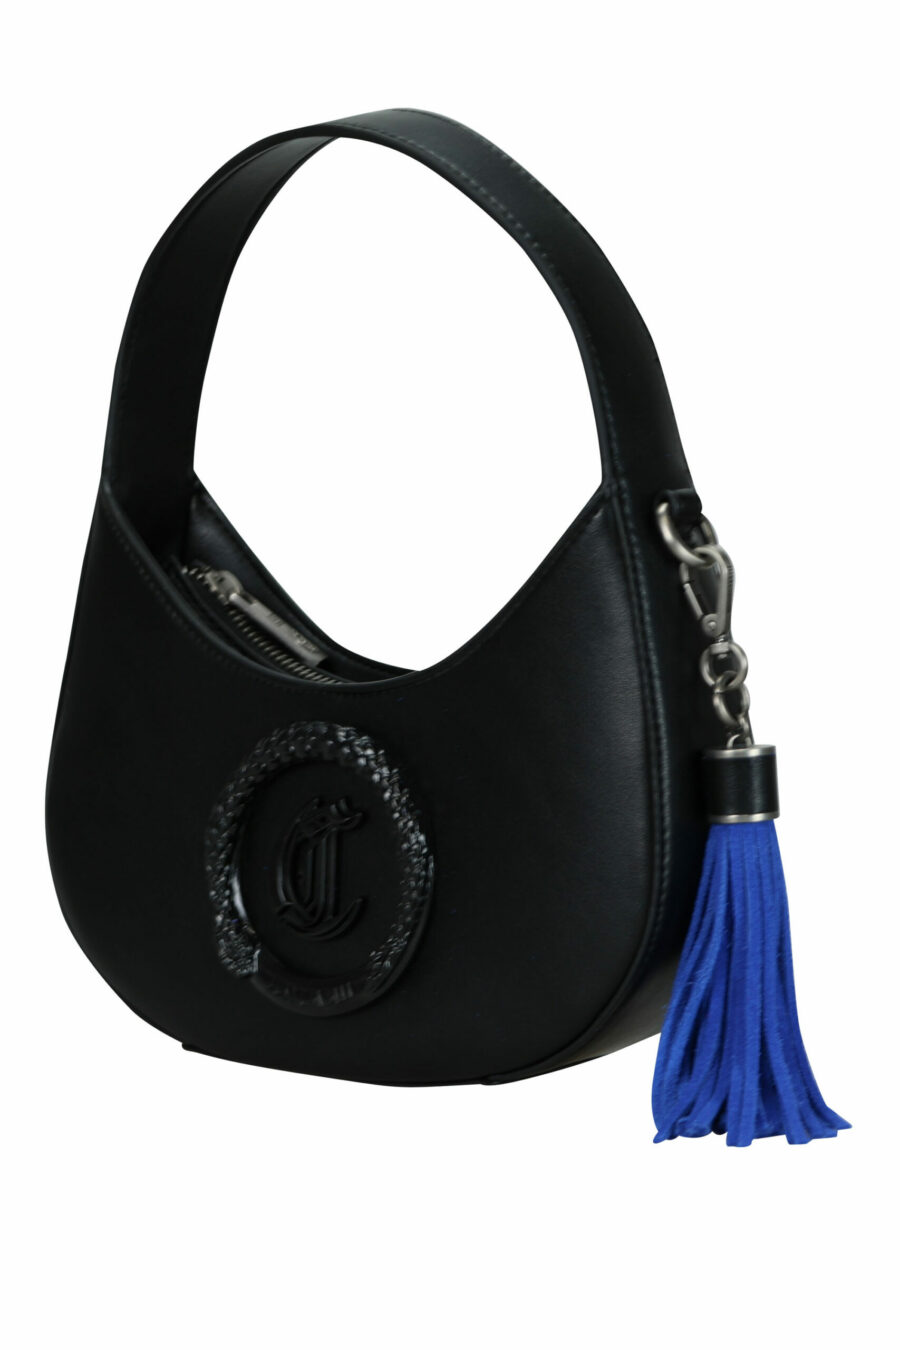 Black shoulder bag with monochrome circular "c" logo - 8052672642738 1 scaled